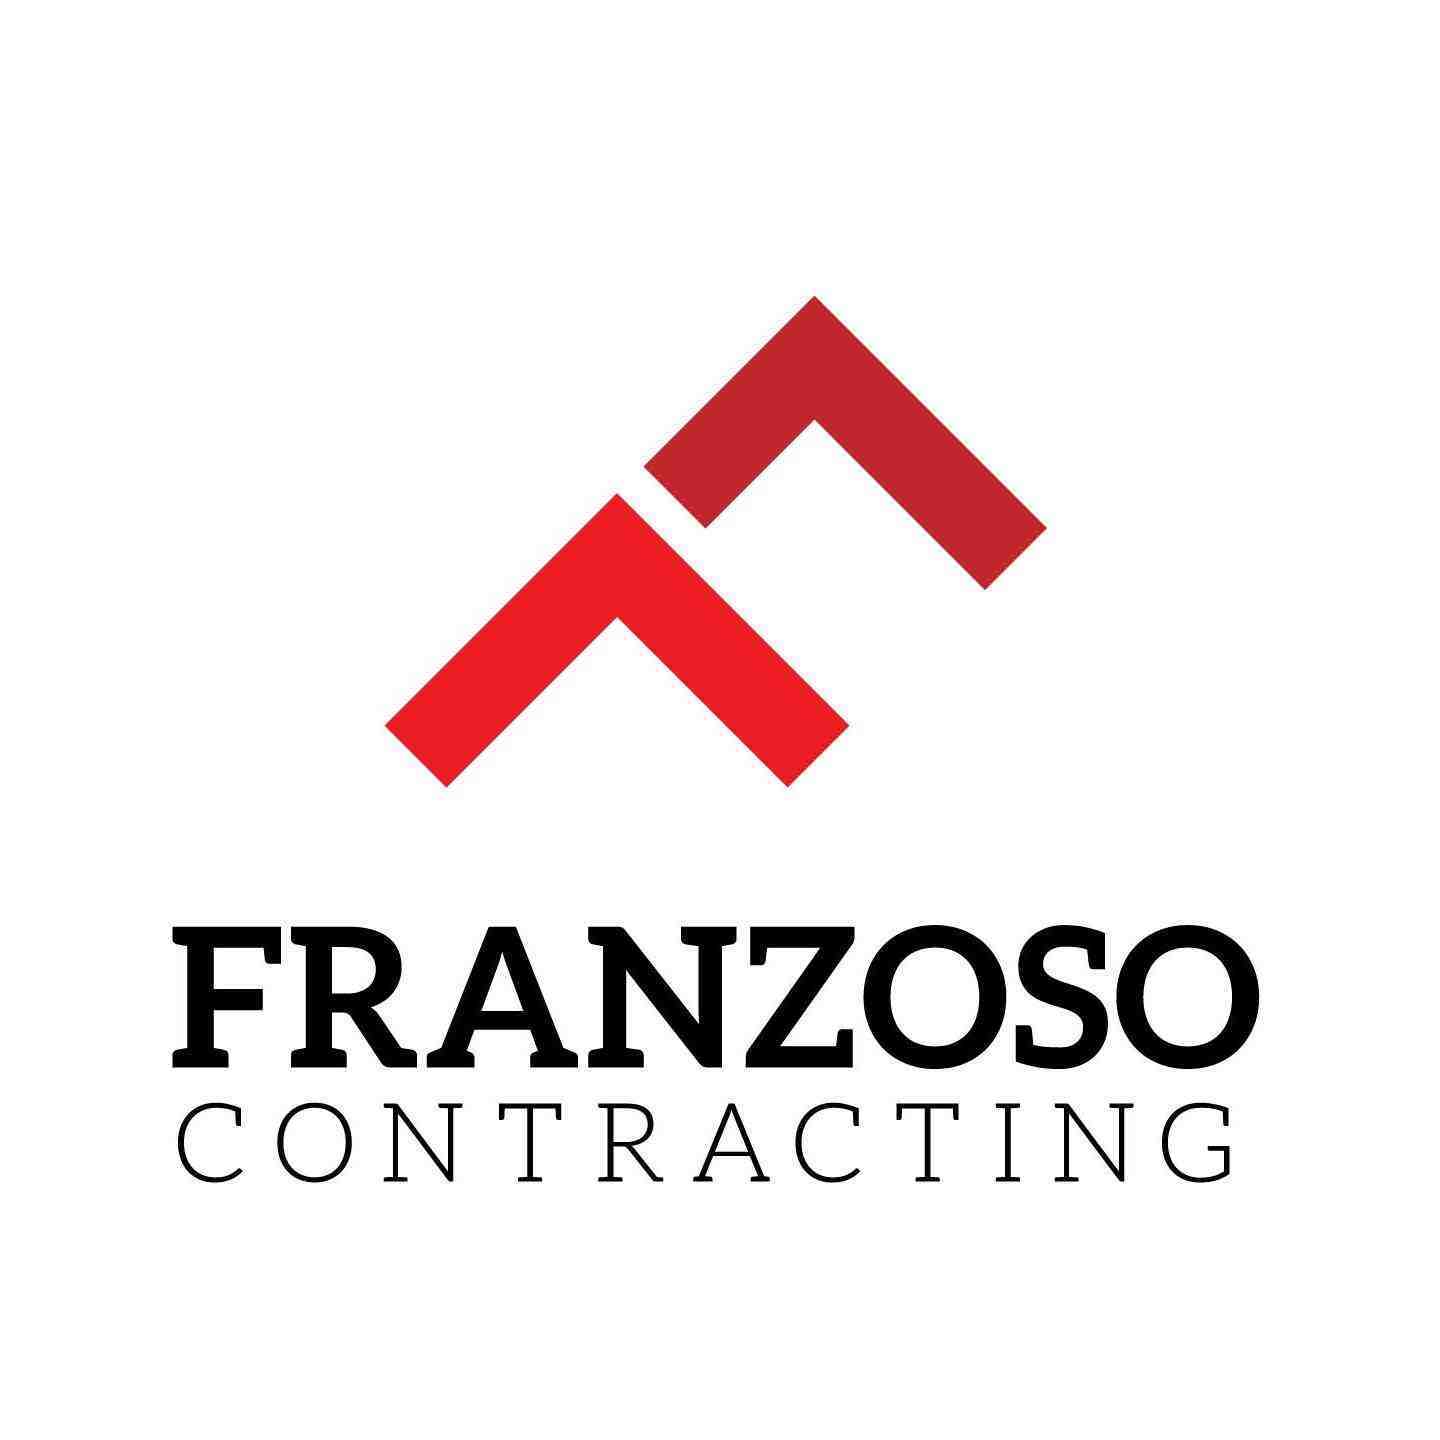 Franzoso Contracting logo